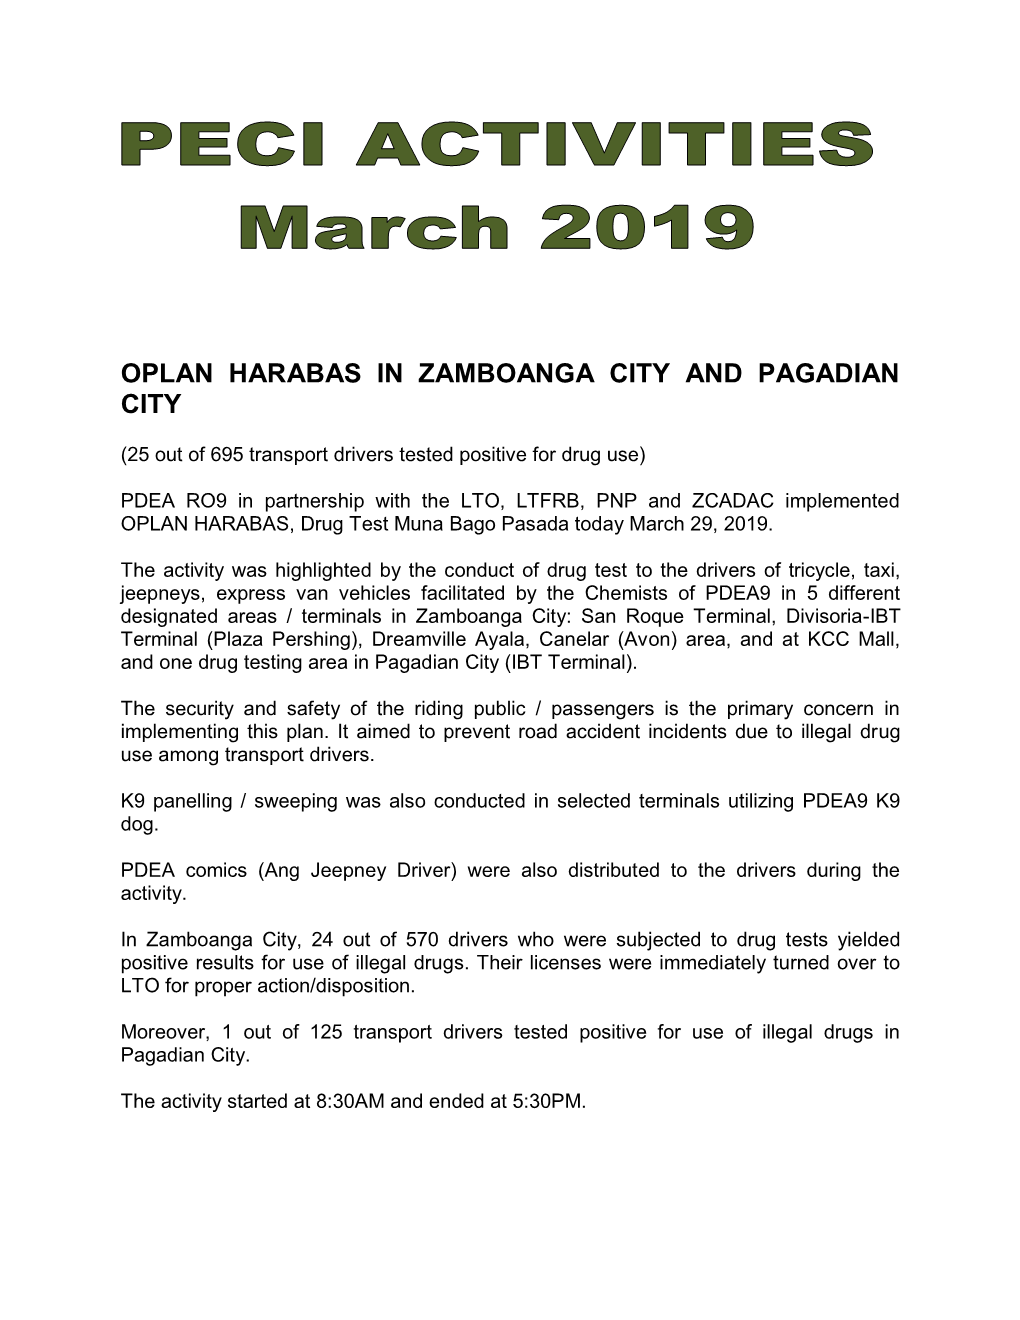 Oplan Harabas in Zamboanga City and Pagadian City